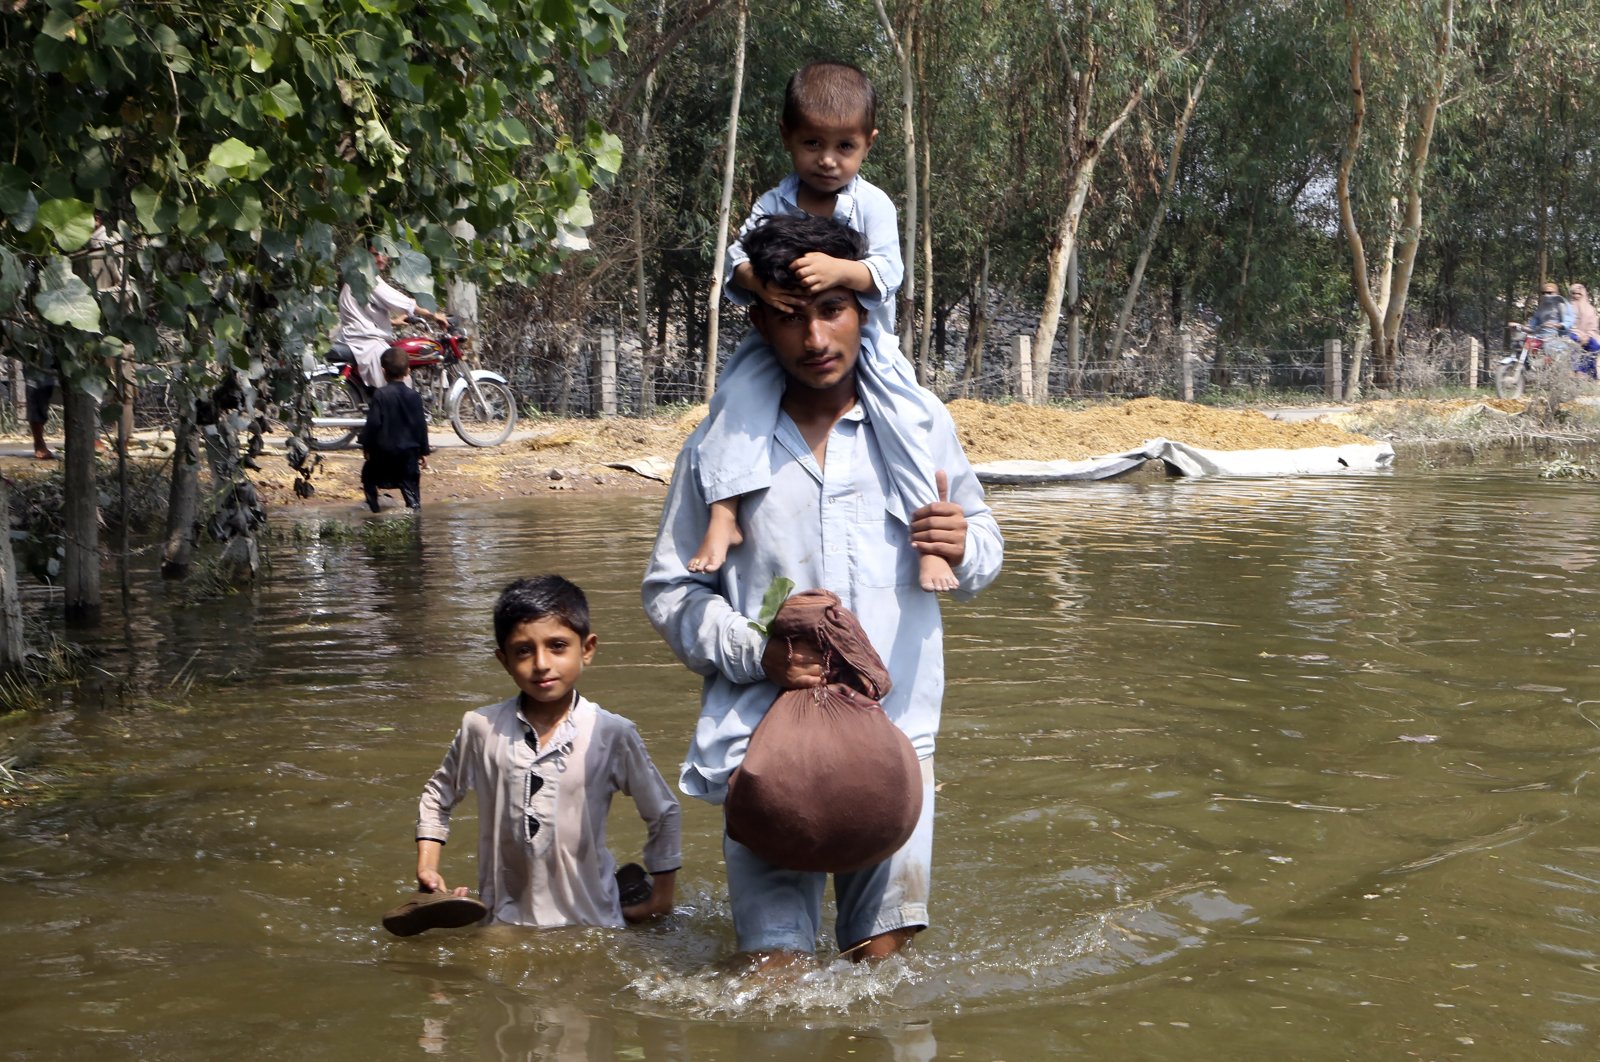 Jutaan anak-anak, wanita berisiko setelah banjir Pakistan: UNICEF